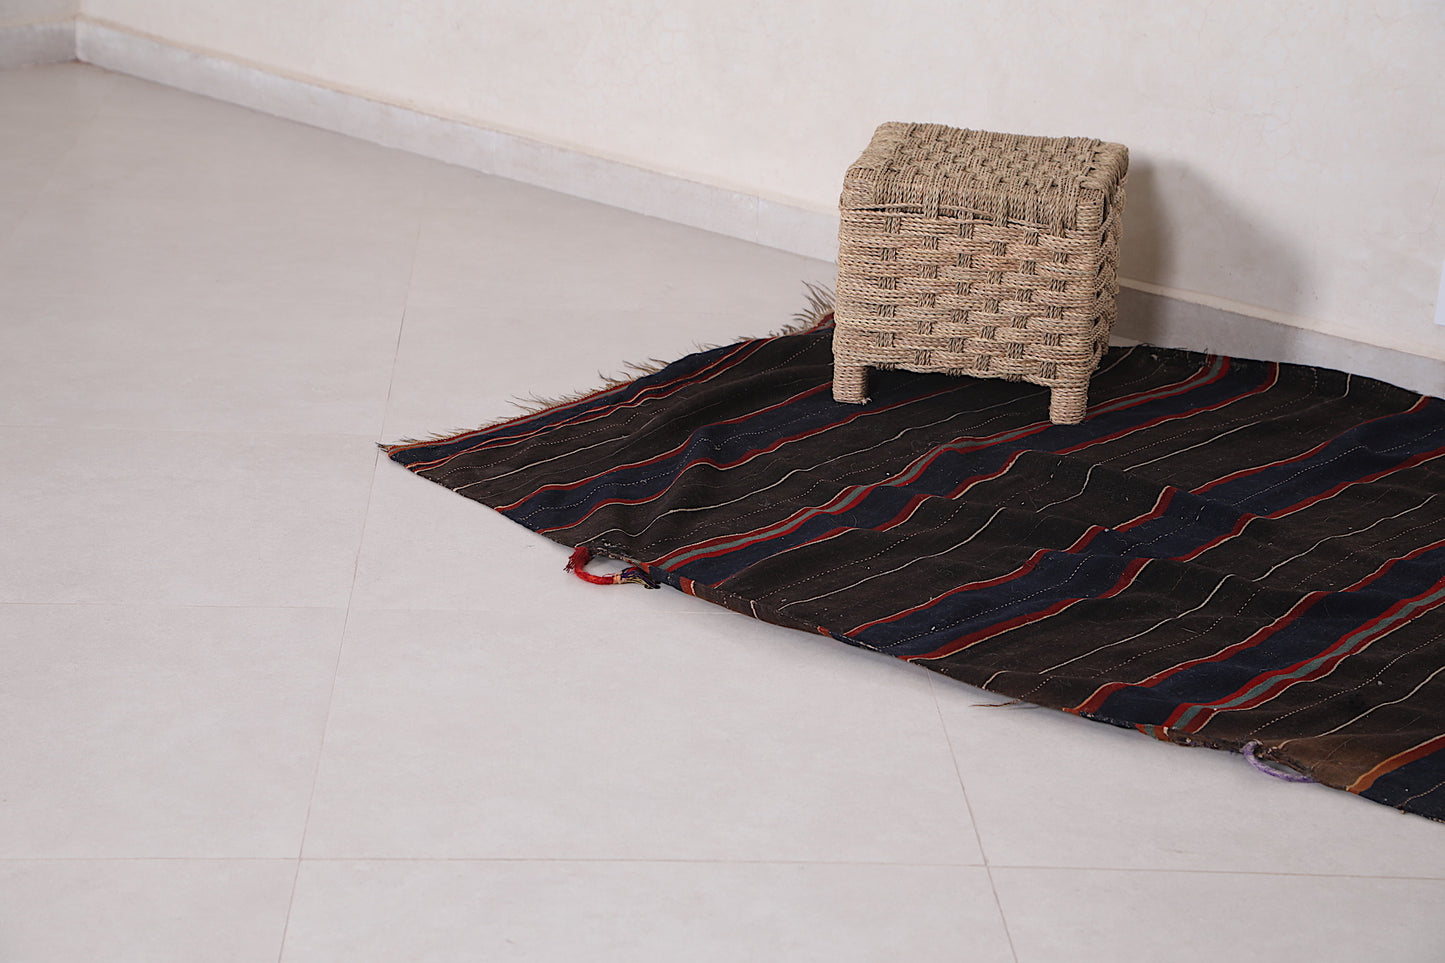 Black Moroccan Blanket 4.1 FT X 5.5 FT